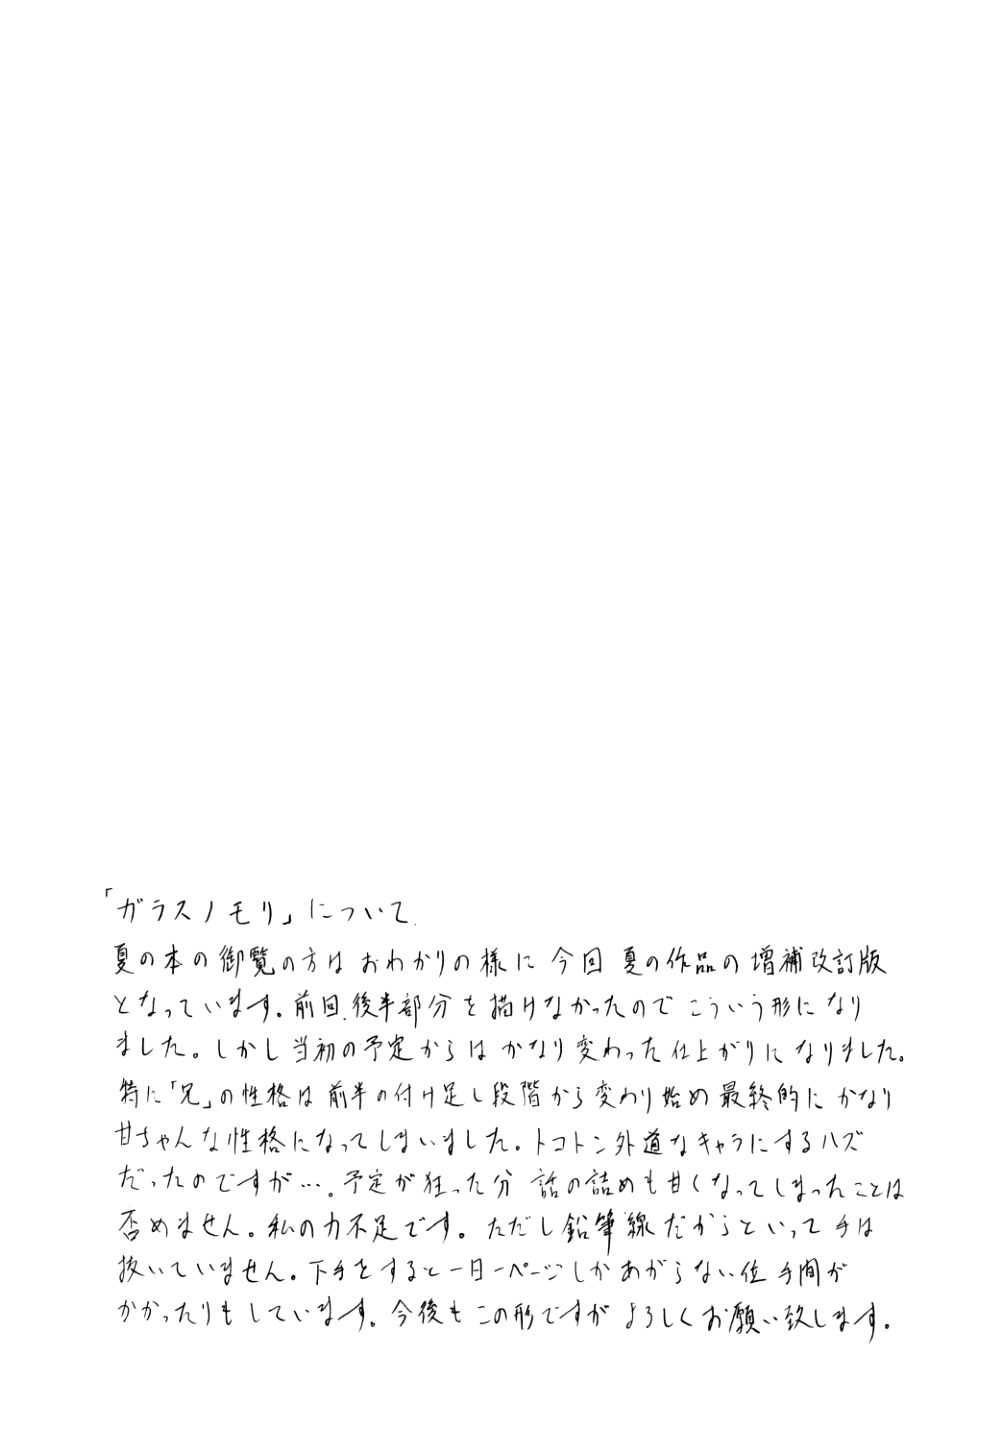 [Uroboros (Hiroyuki Utatane)] Pure Pure 2nd Edition [Uroboros (うたたねひろゆき)] Pure Pure 2nd Edition